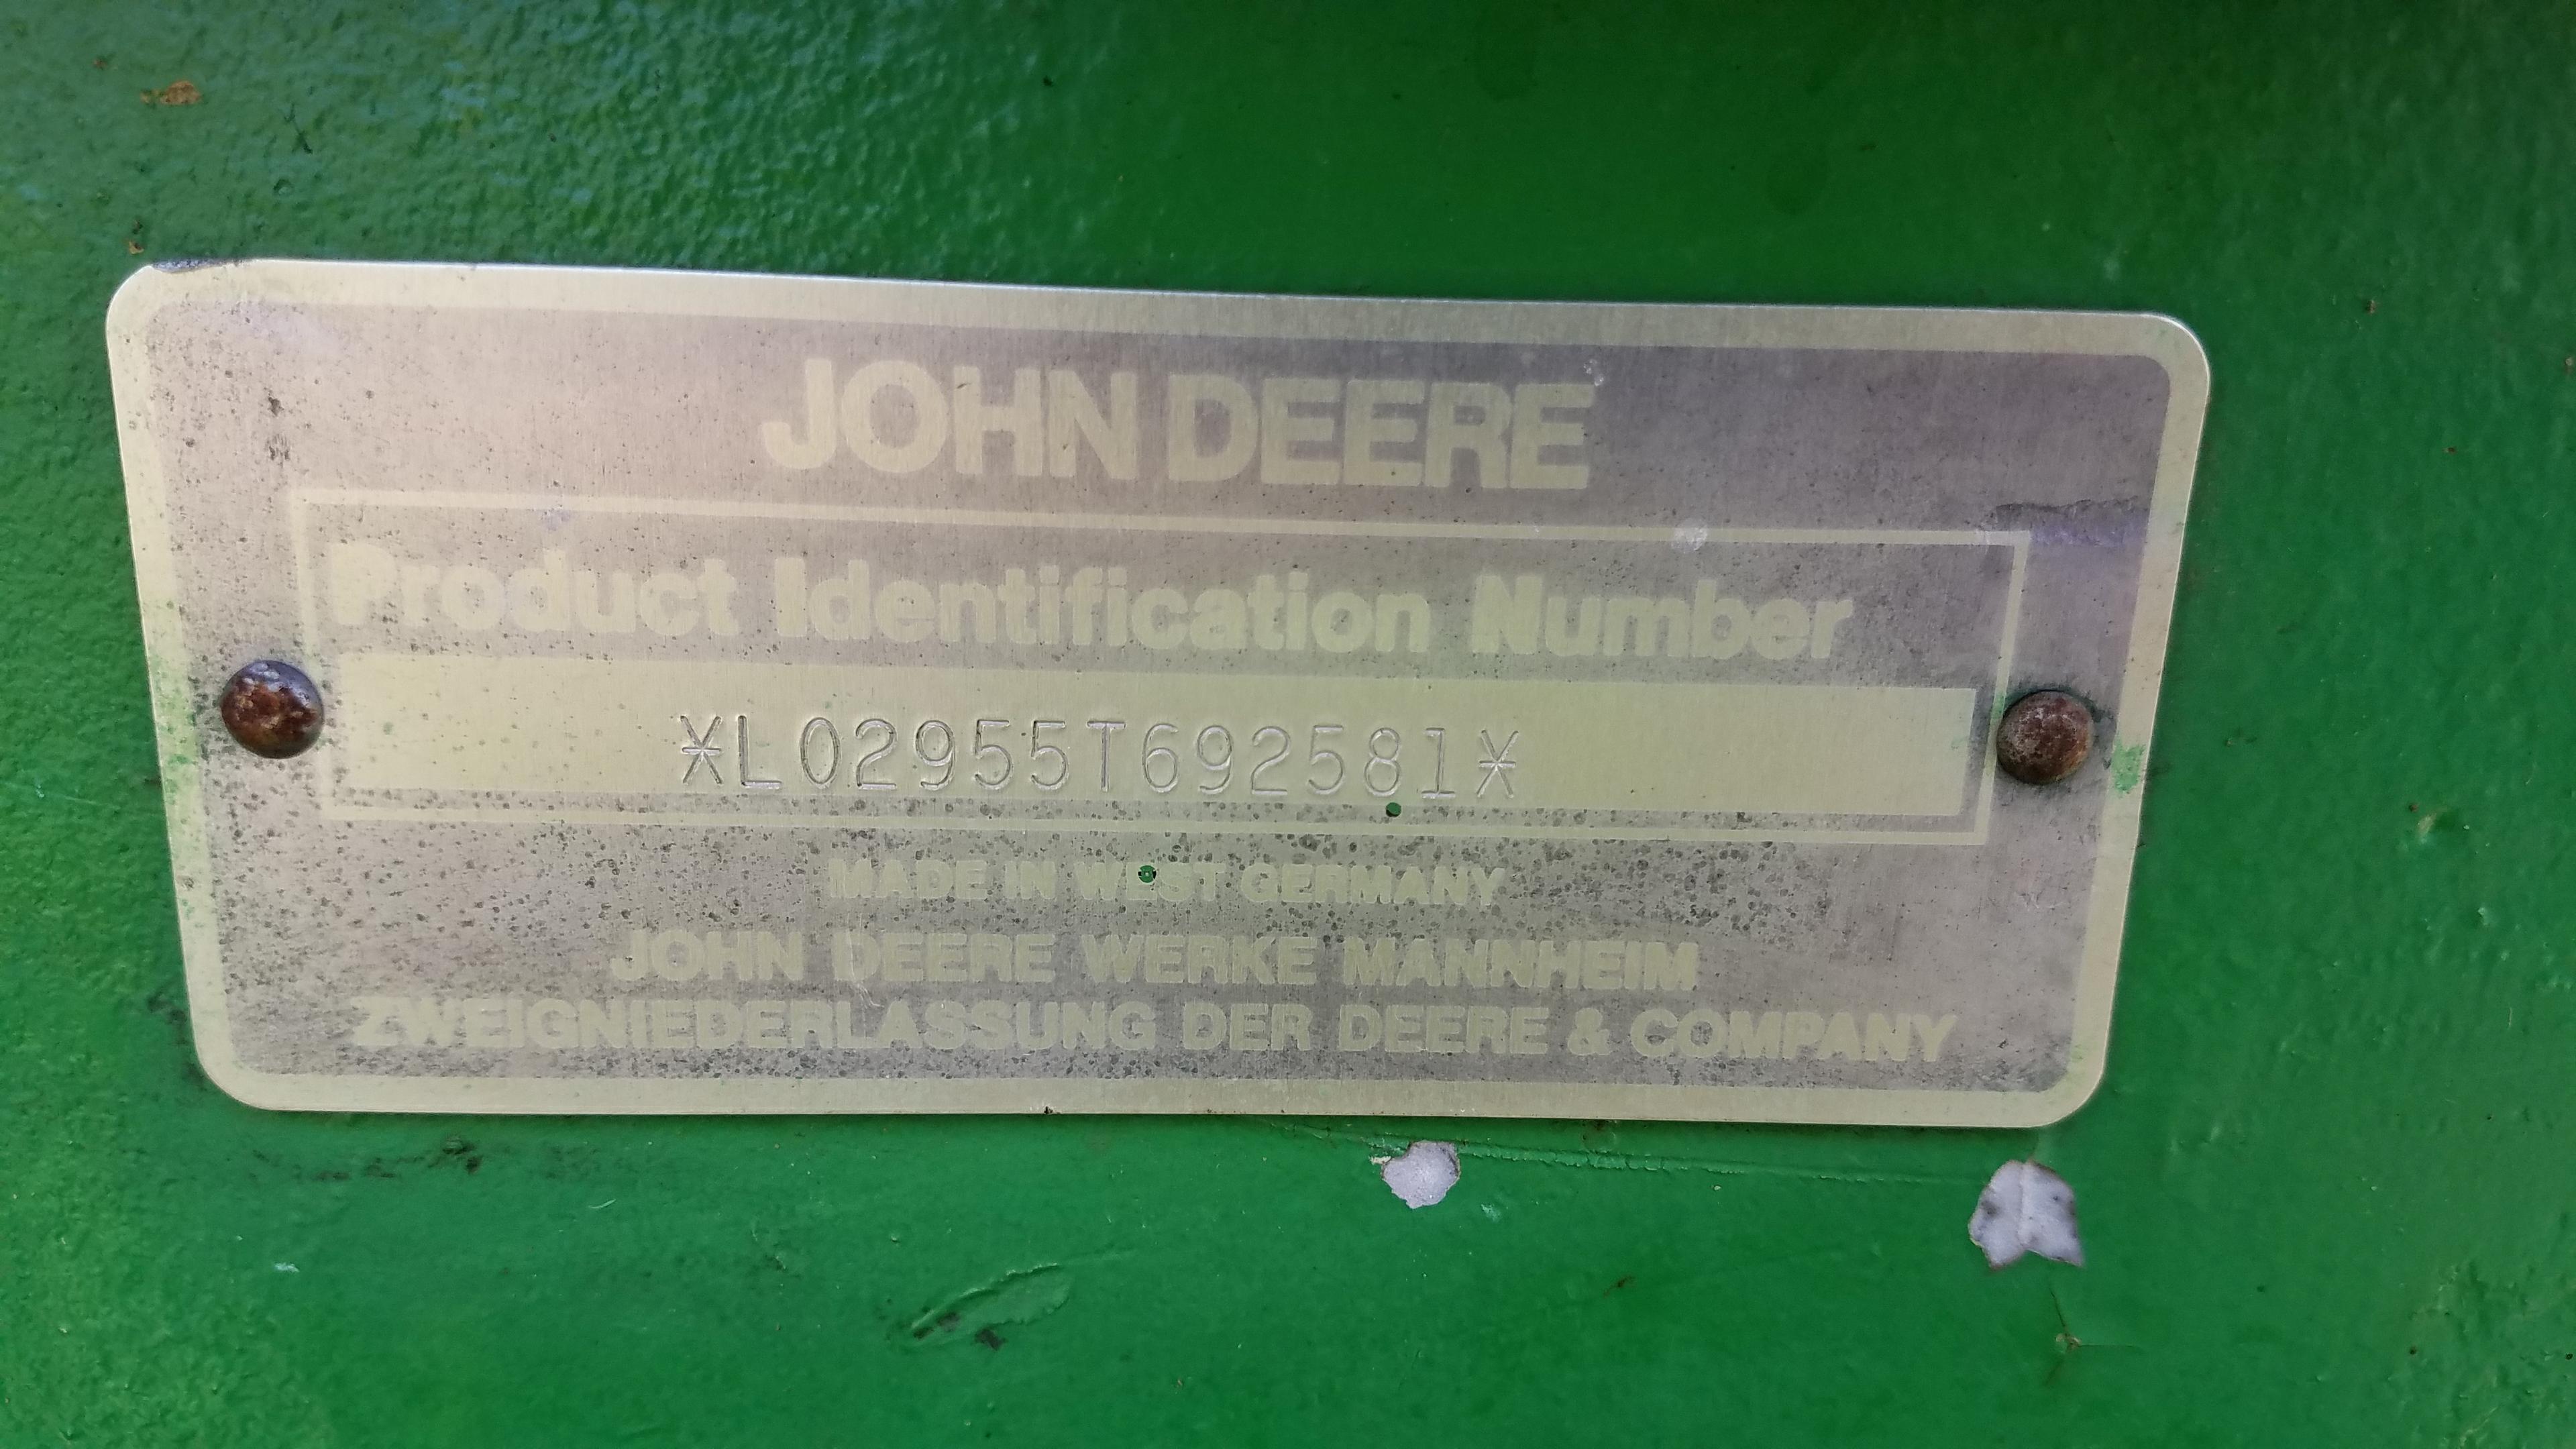 John Deere 2955 s/n: L2955T692581 - One owner, purchased new in 1990. 6276